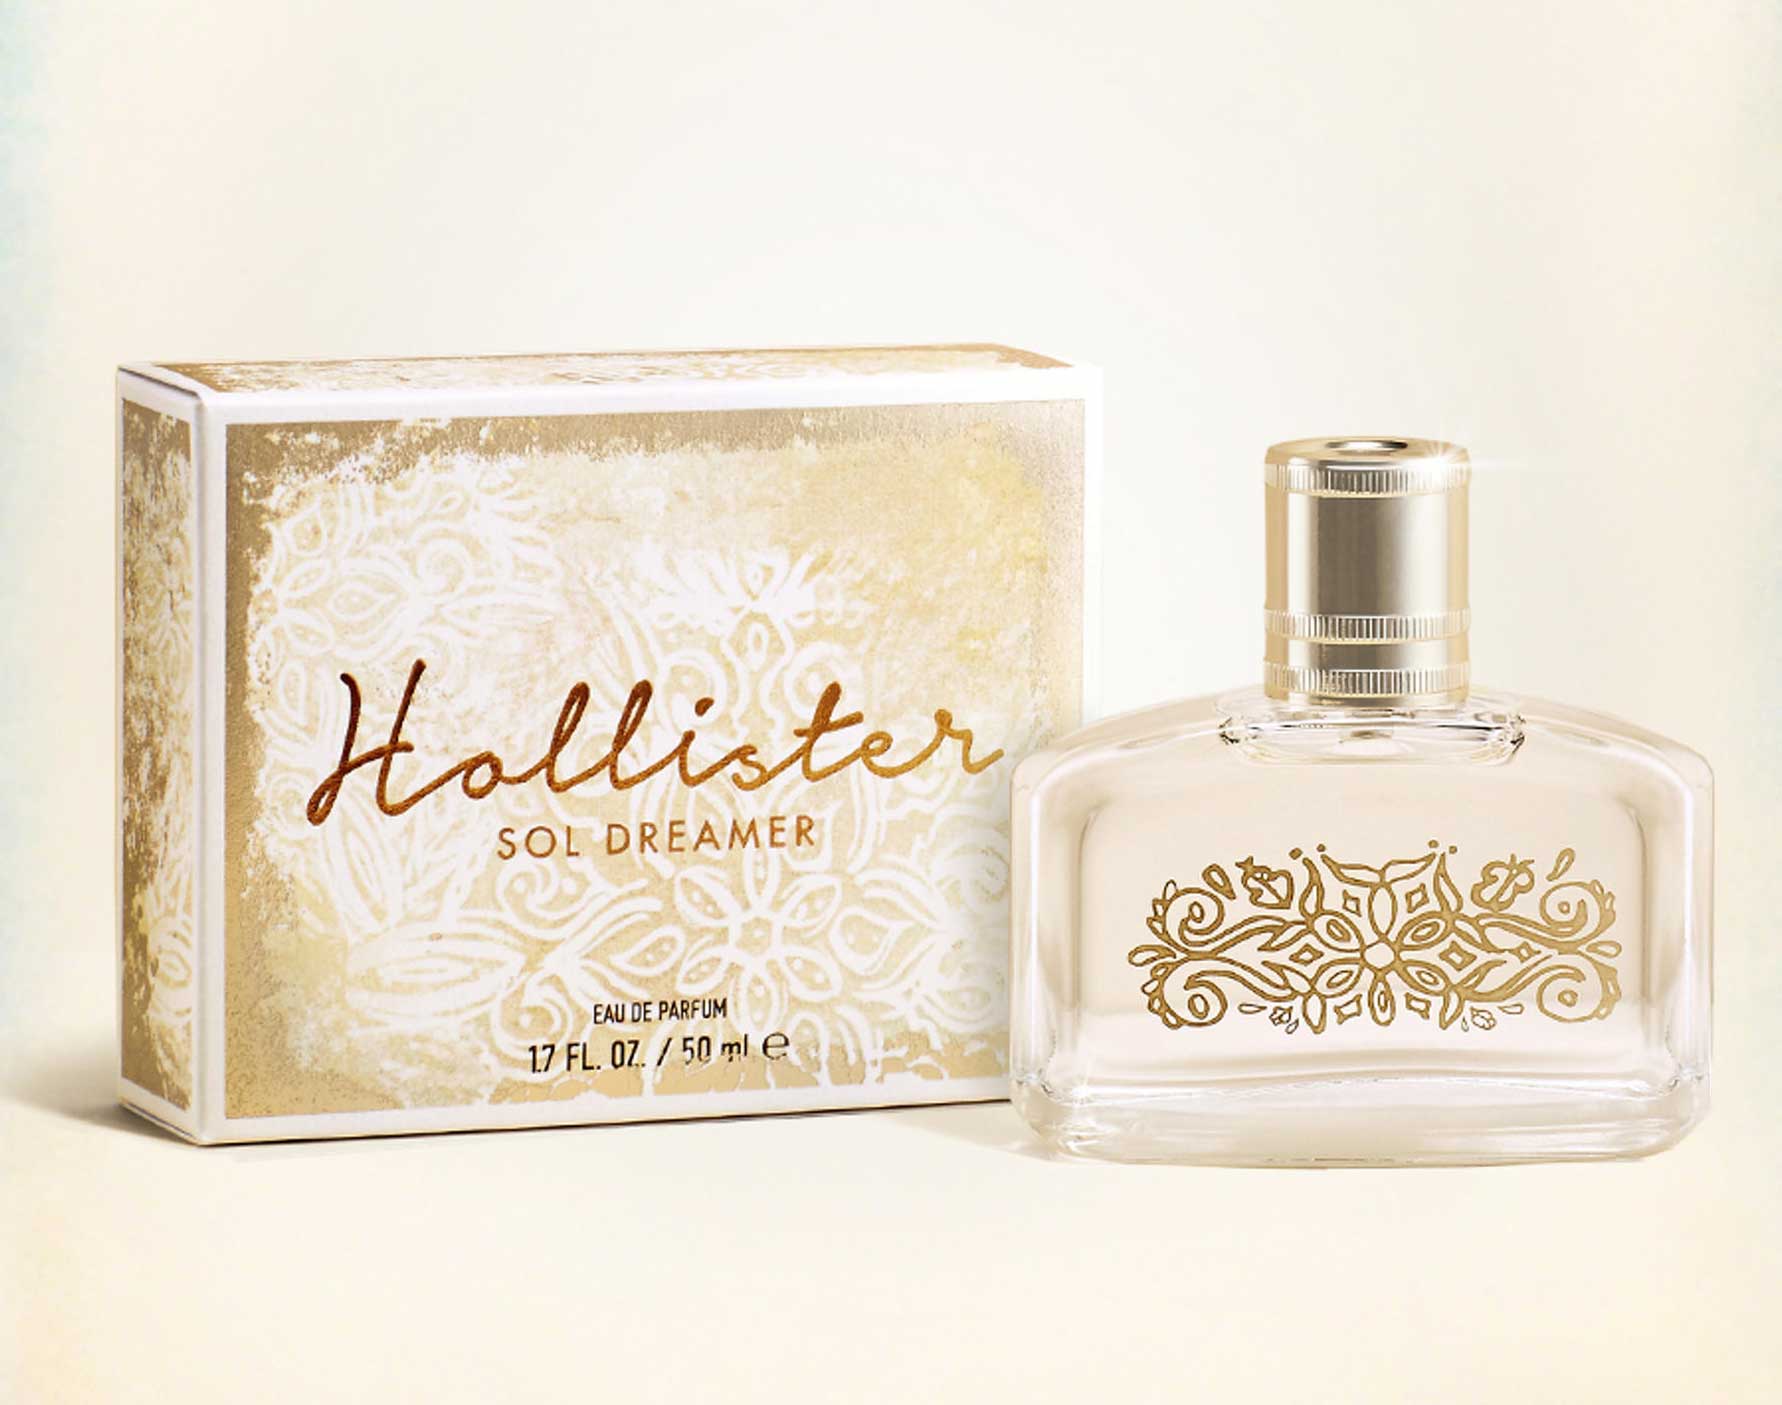 Sol Dreamer Hollister perfume - a 